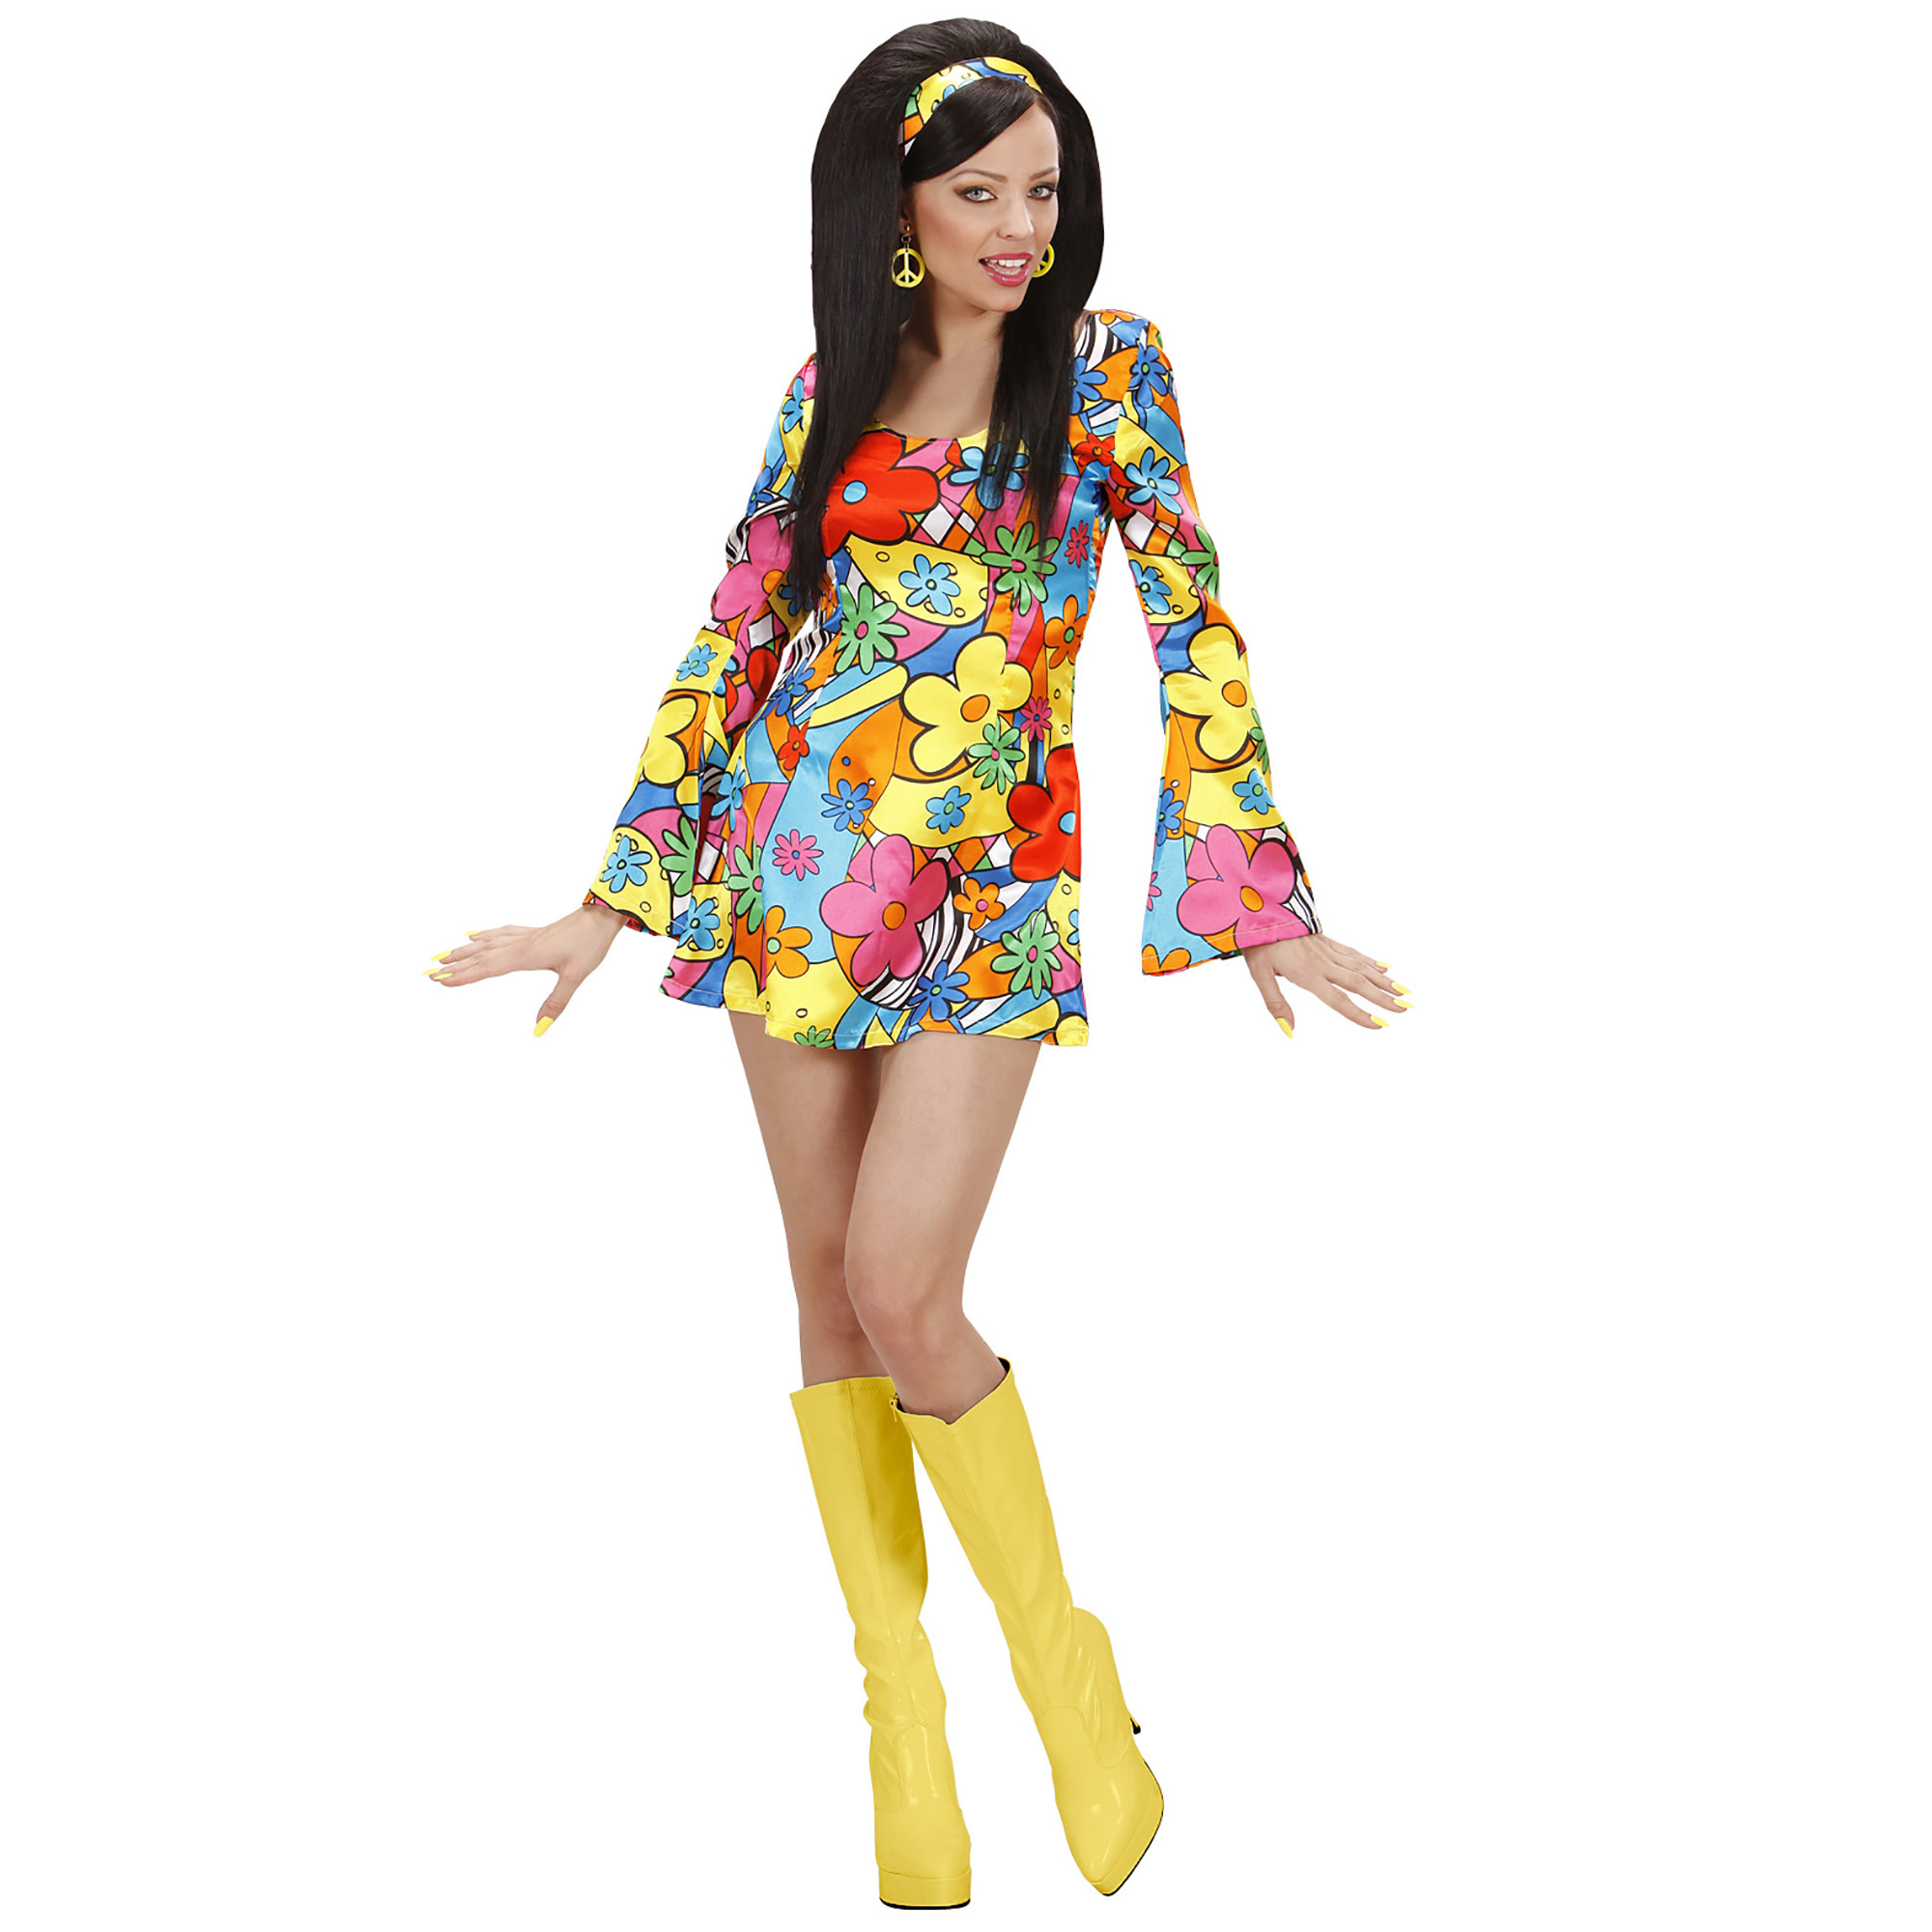 Hippie-jurkje met bloemmotief e-Carnavalskleding